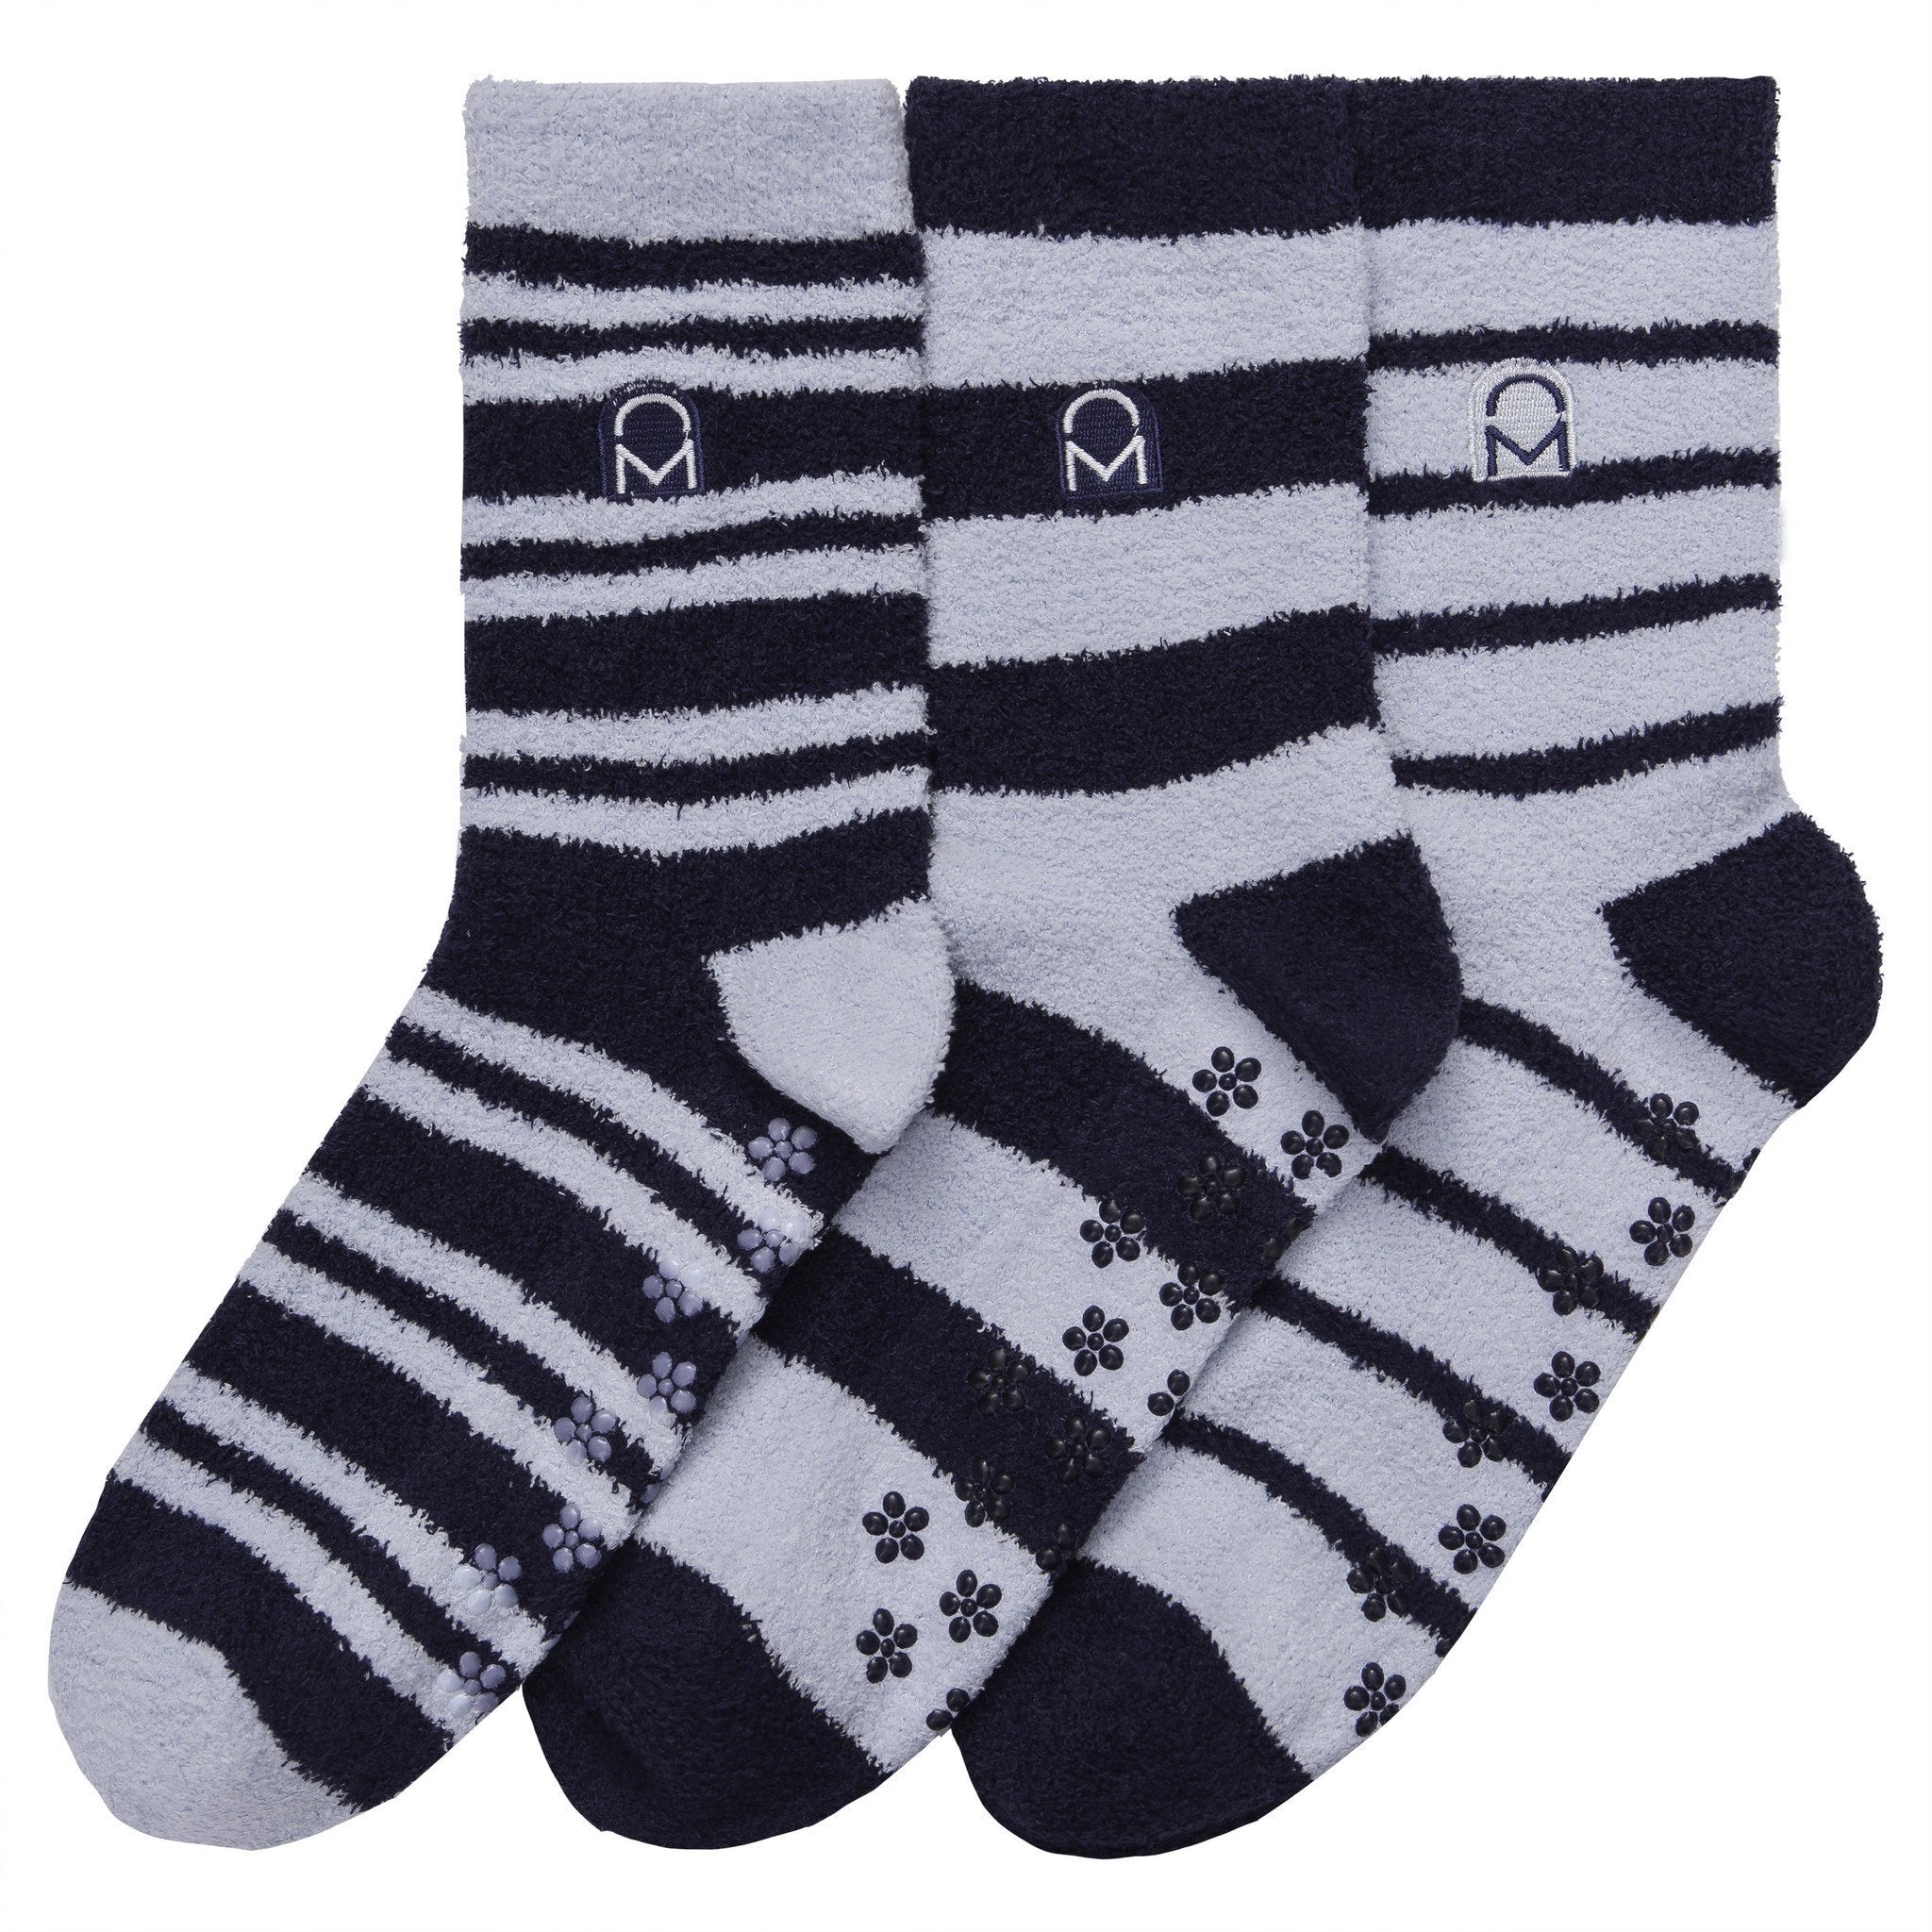 Women's Soft Anti-Skid Micro-Plush Winter Crew Socks - Set C9